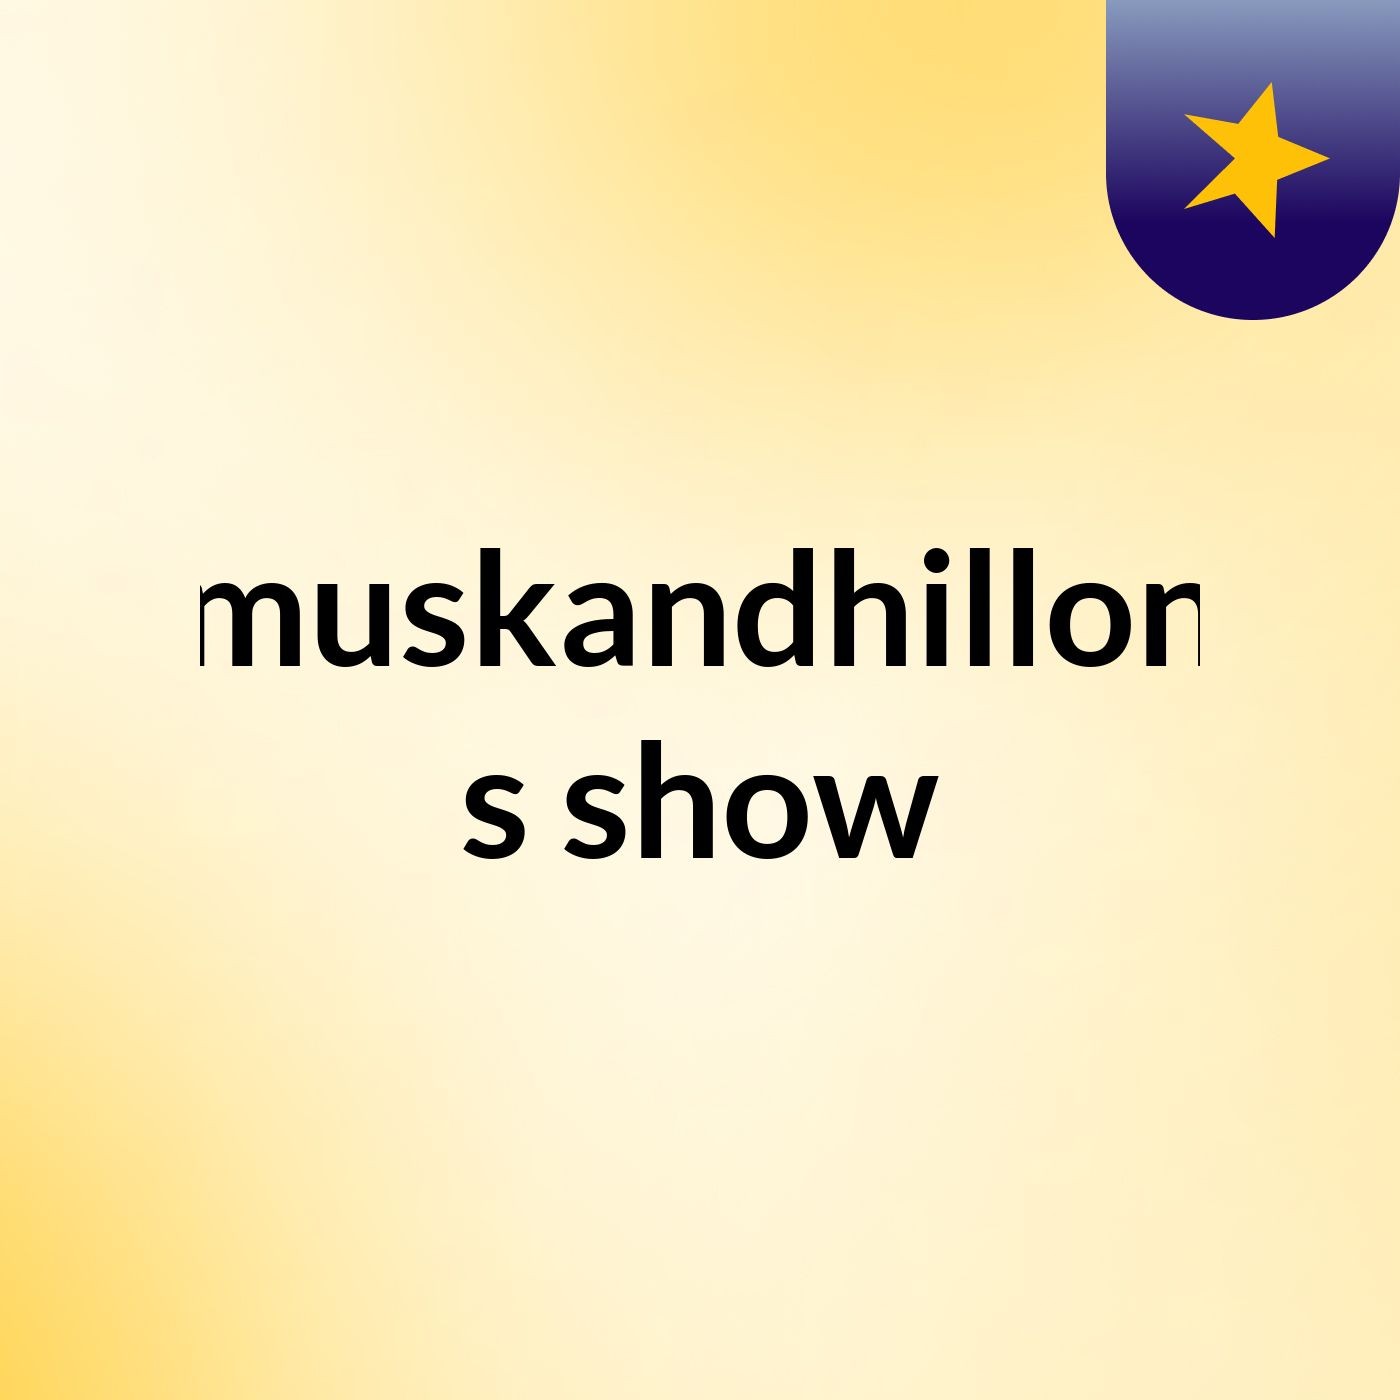 muskandhillon's show